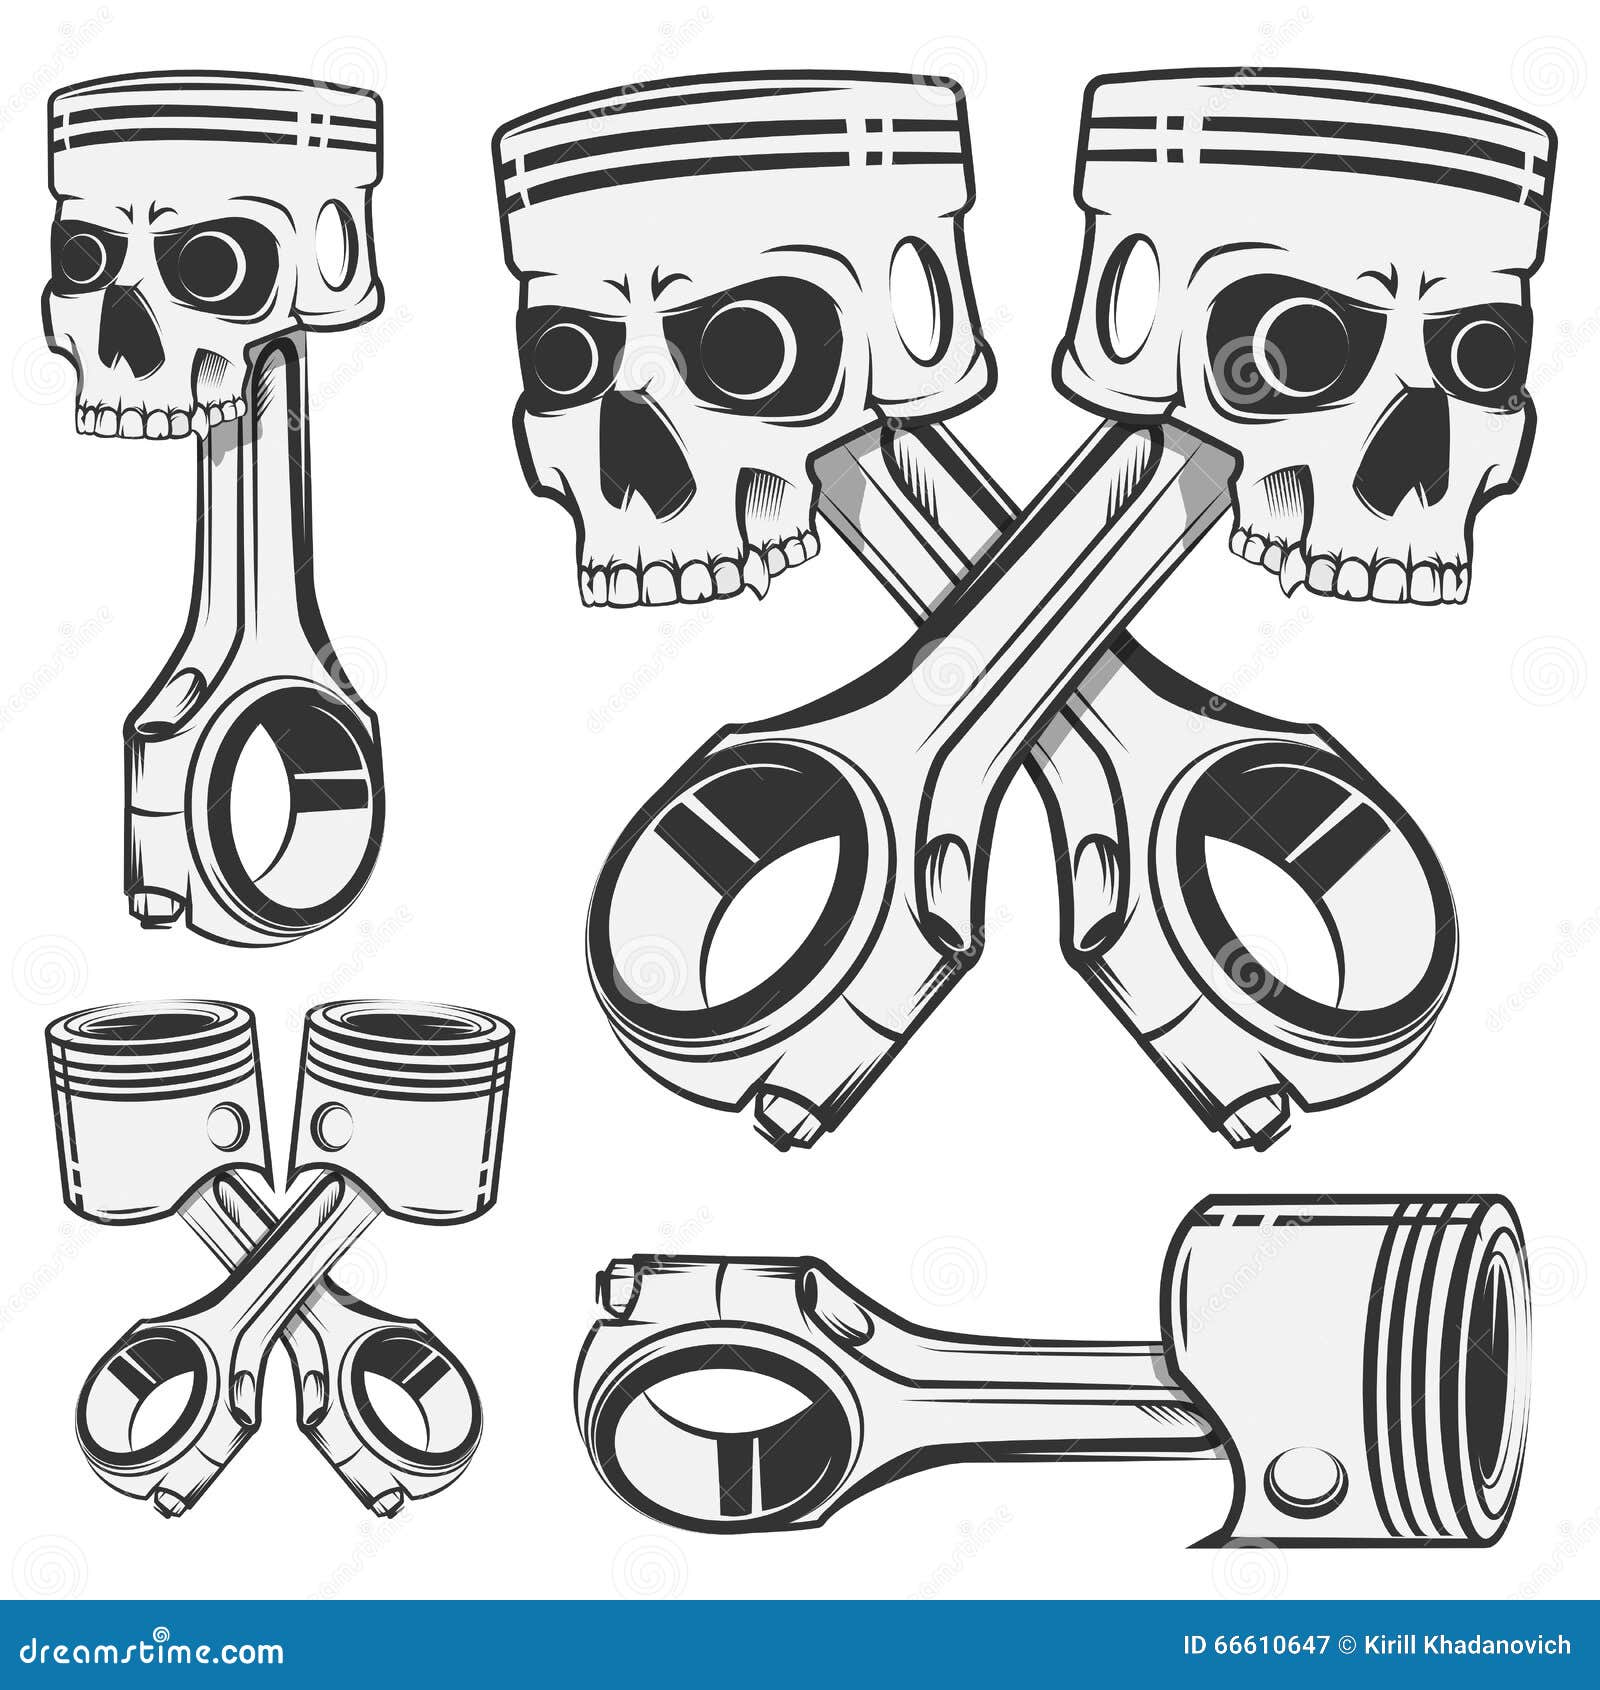 Punctured Piercing  Tattoo in Bountiful Utah Skull wrench and piston  skull tattoo wrench